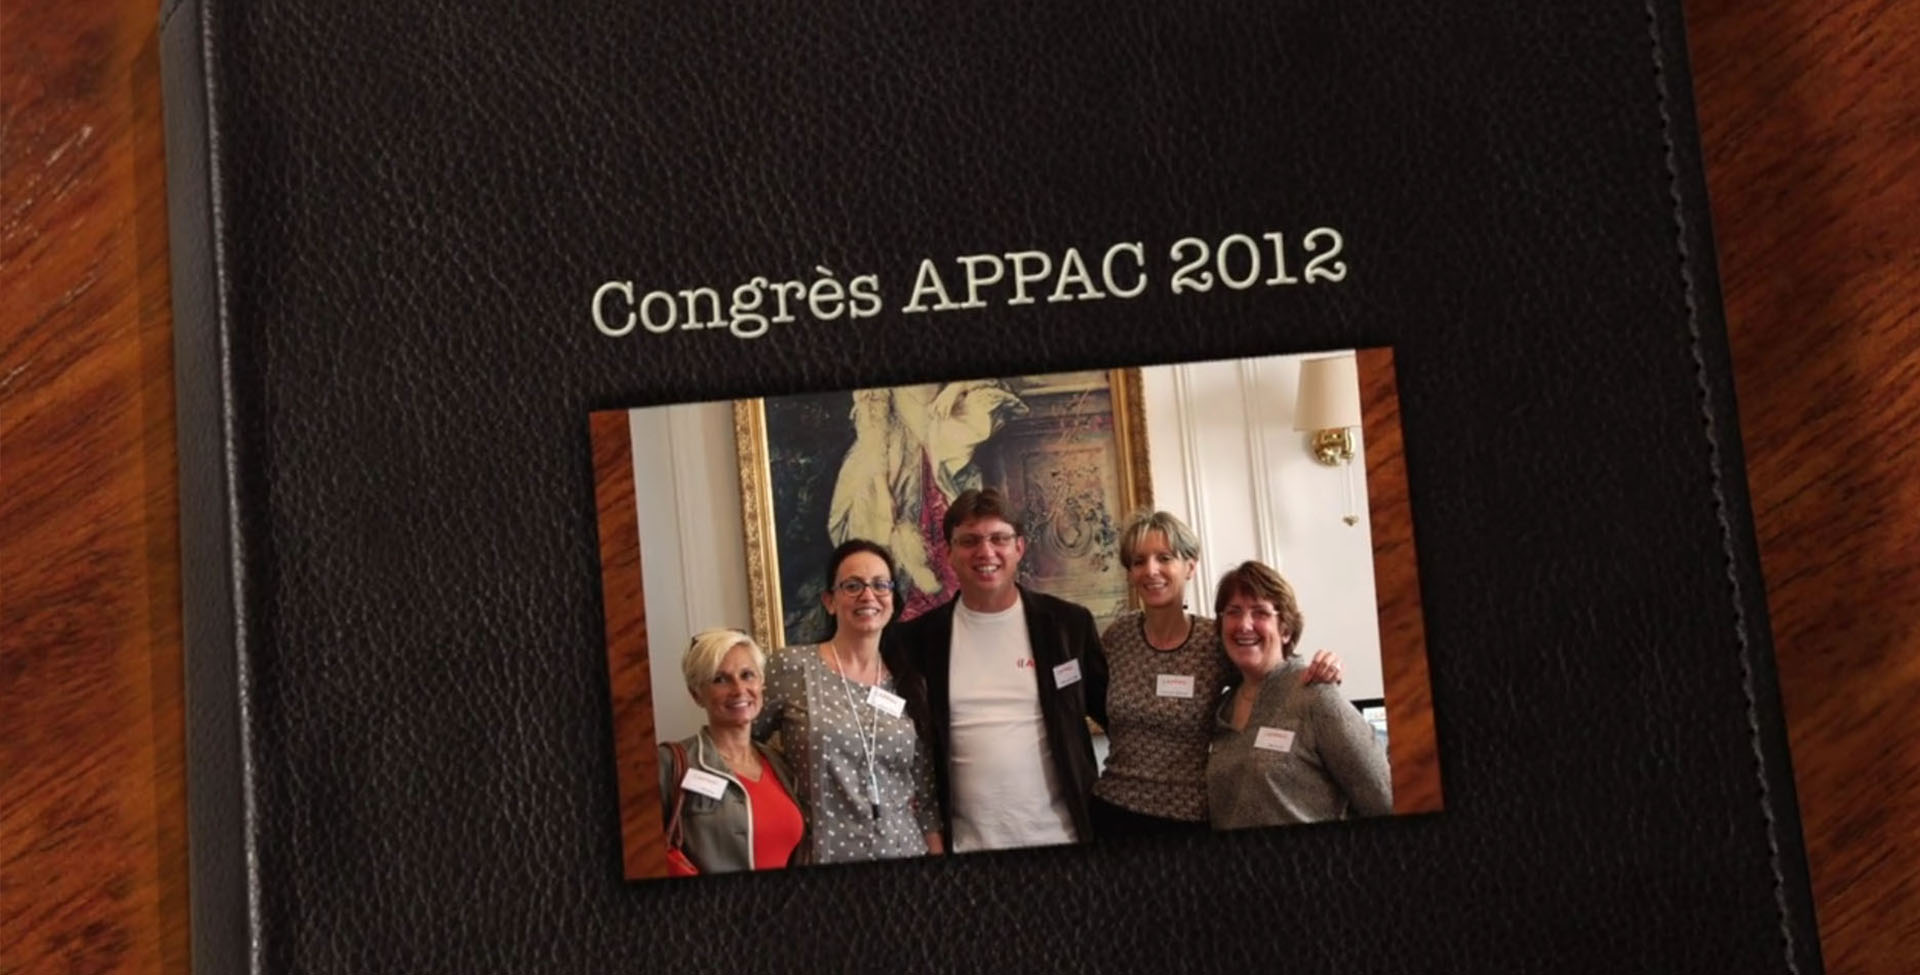 Corporate video : Congrès Appac 2012